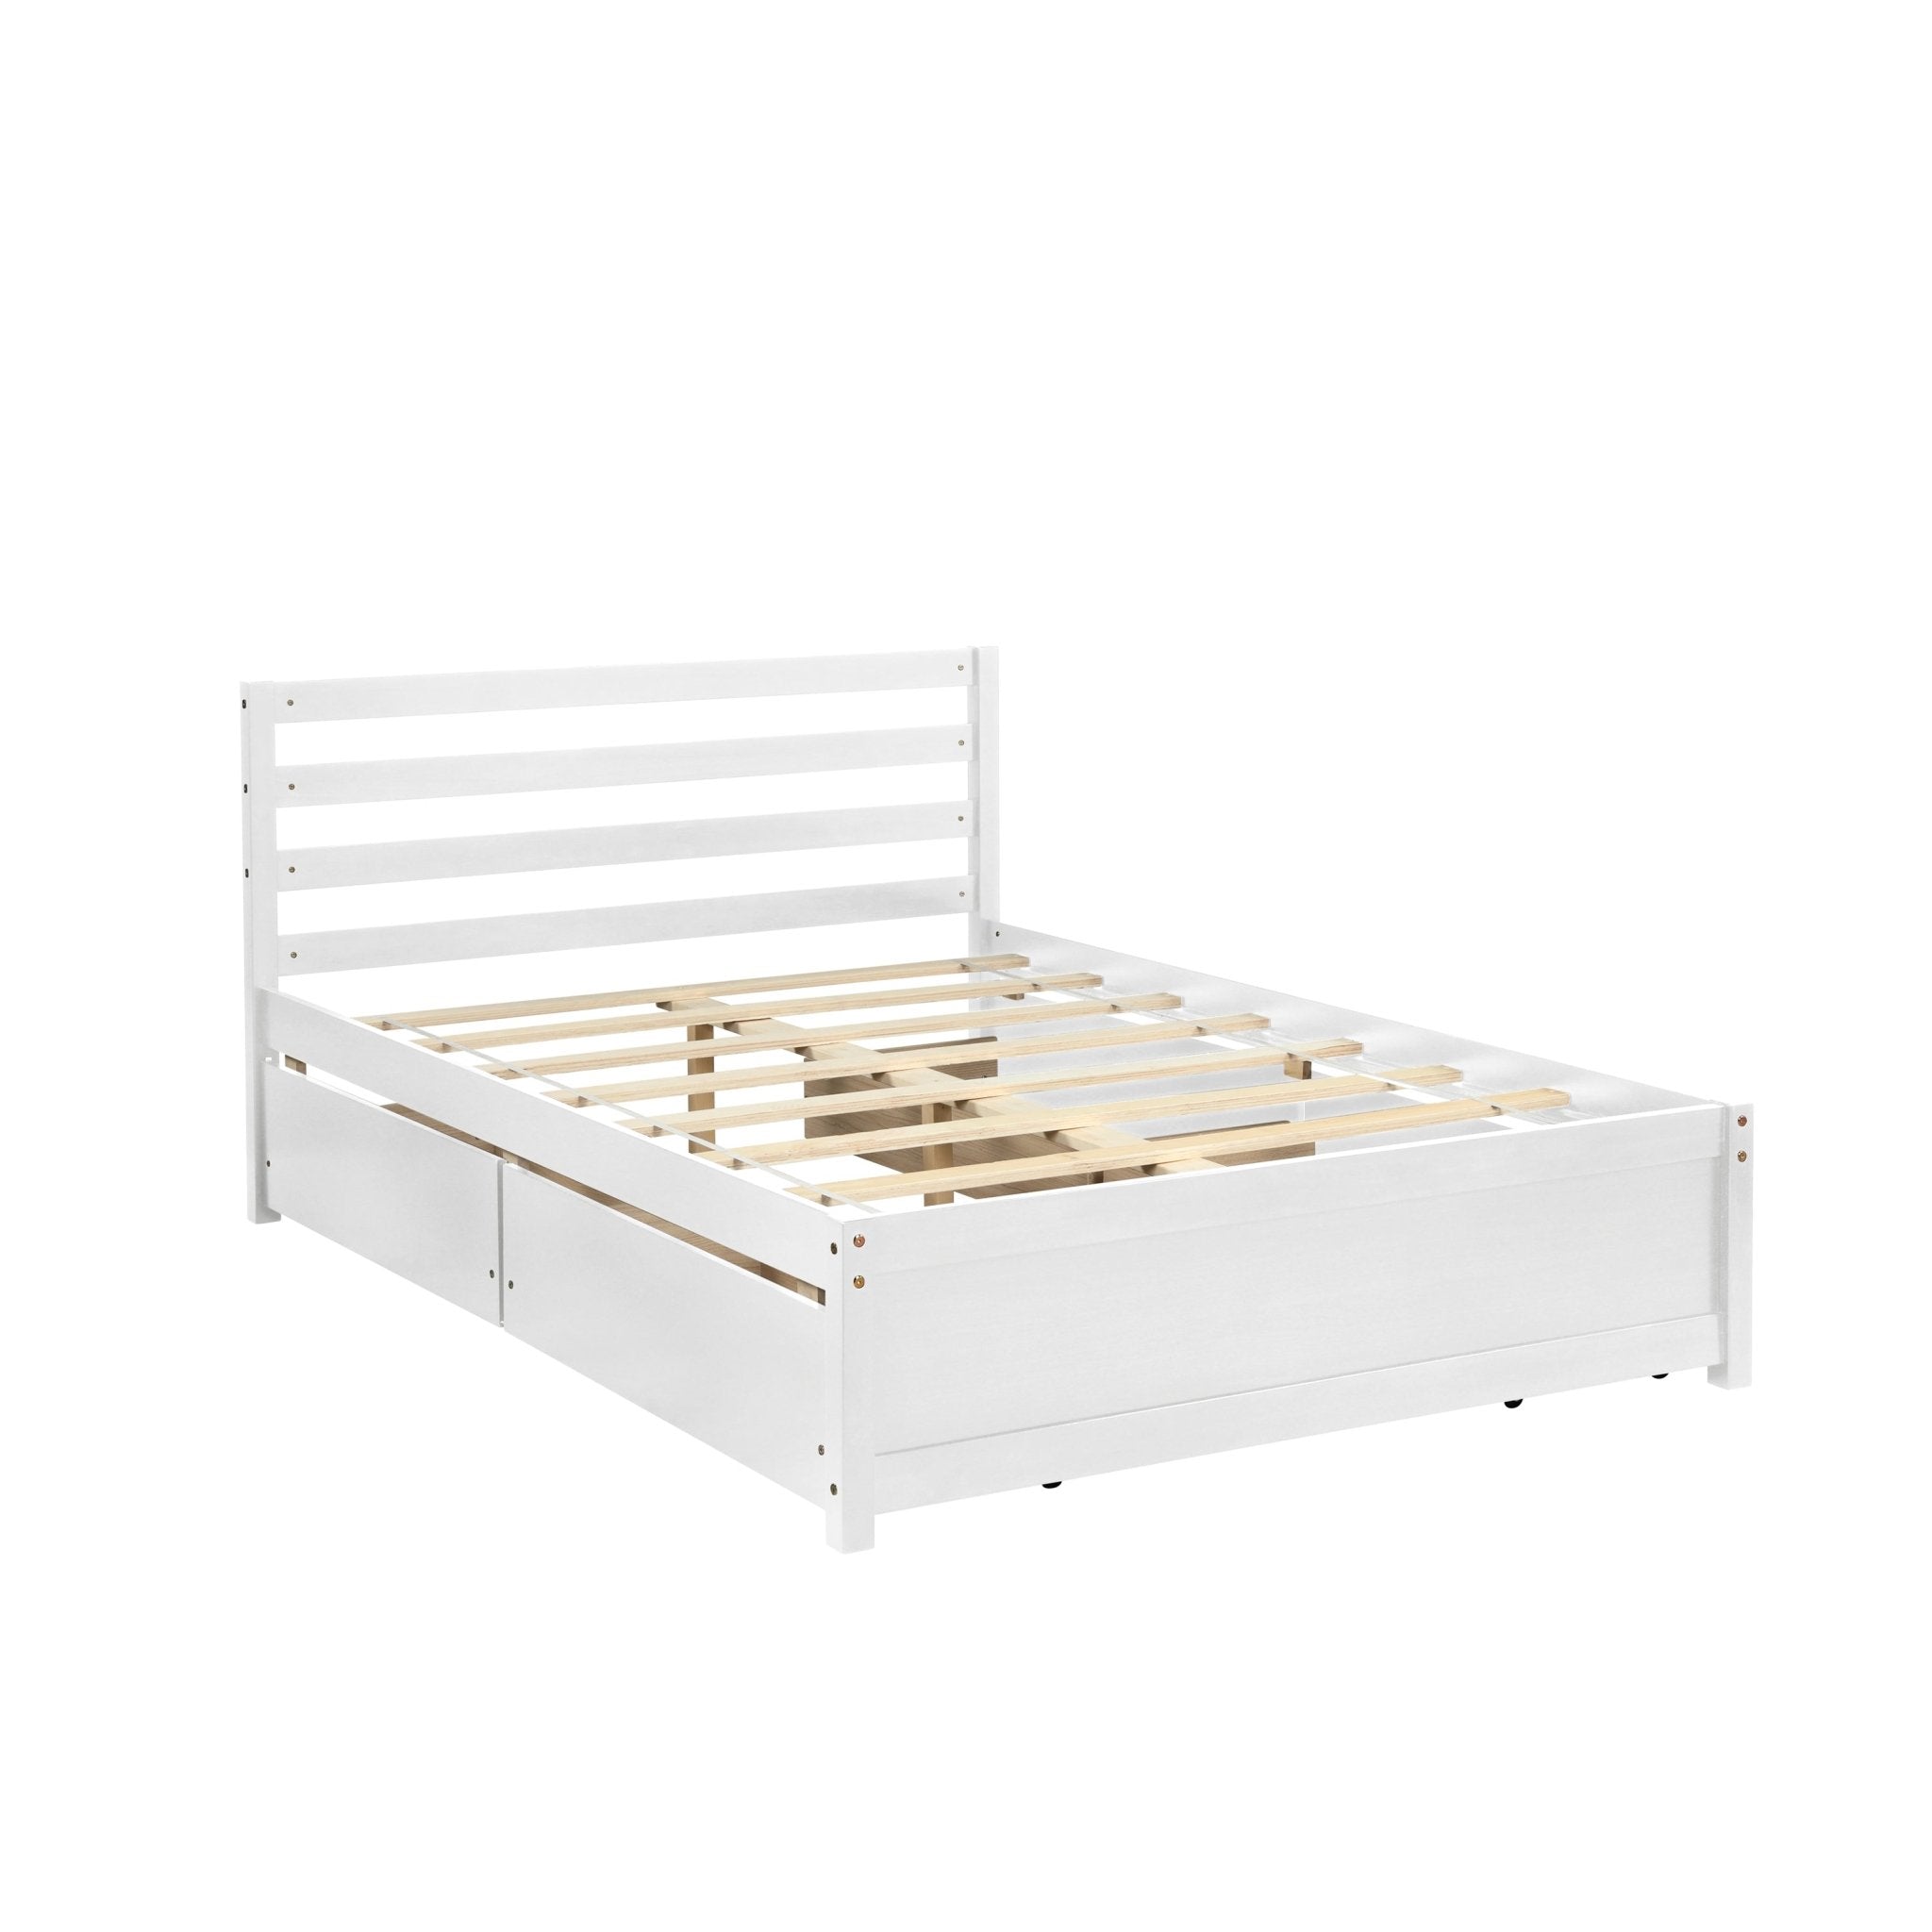 Bellemave Full Size Wood Platform Bed Frame w/Headboard and Four Drawers - Bellemave